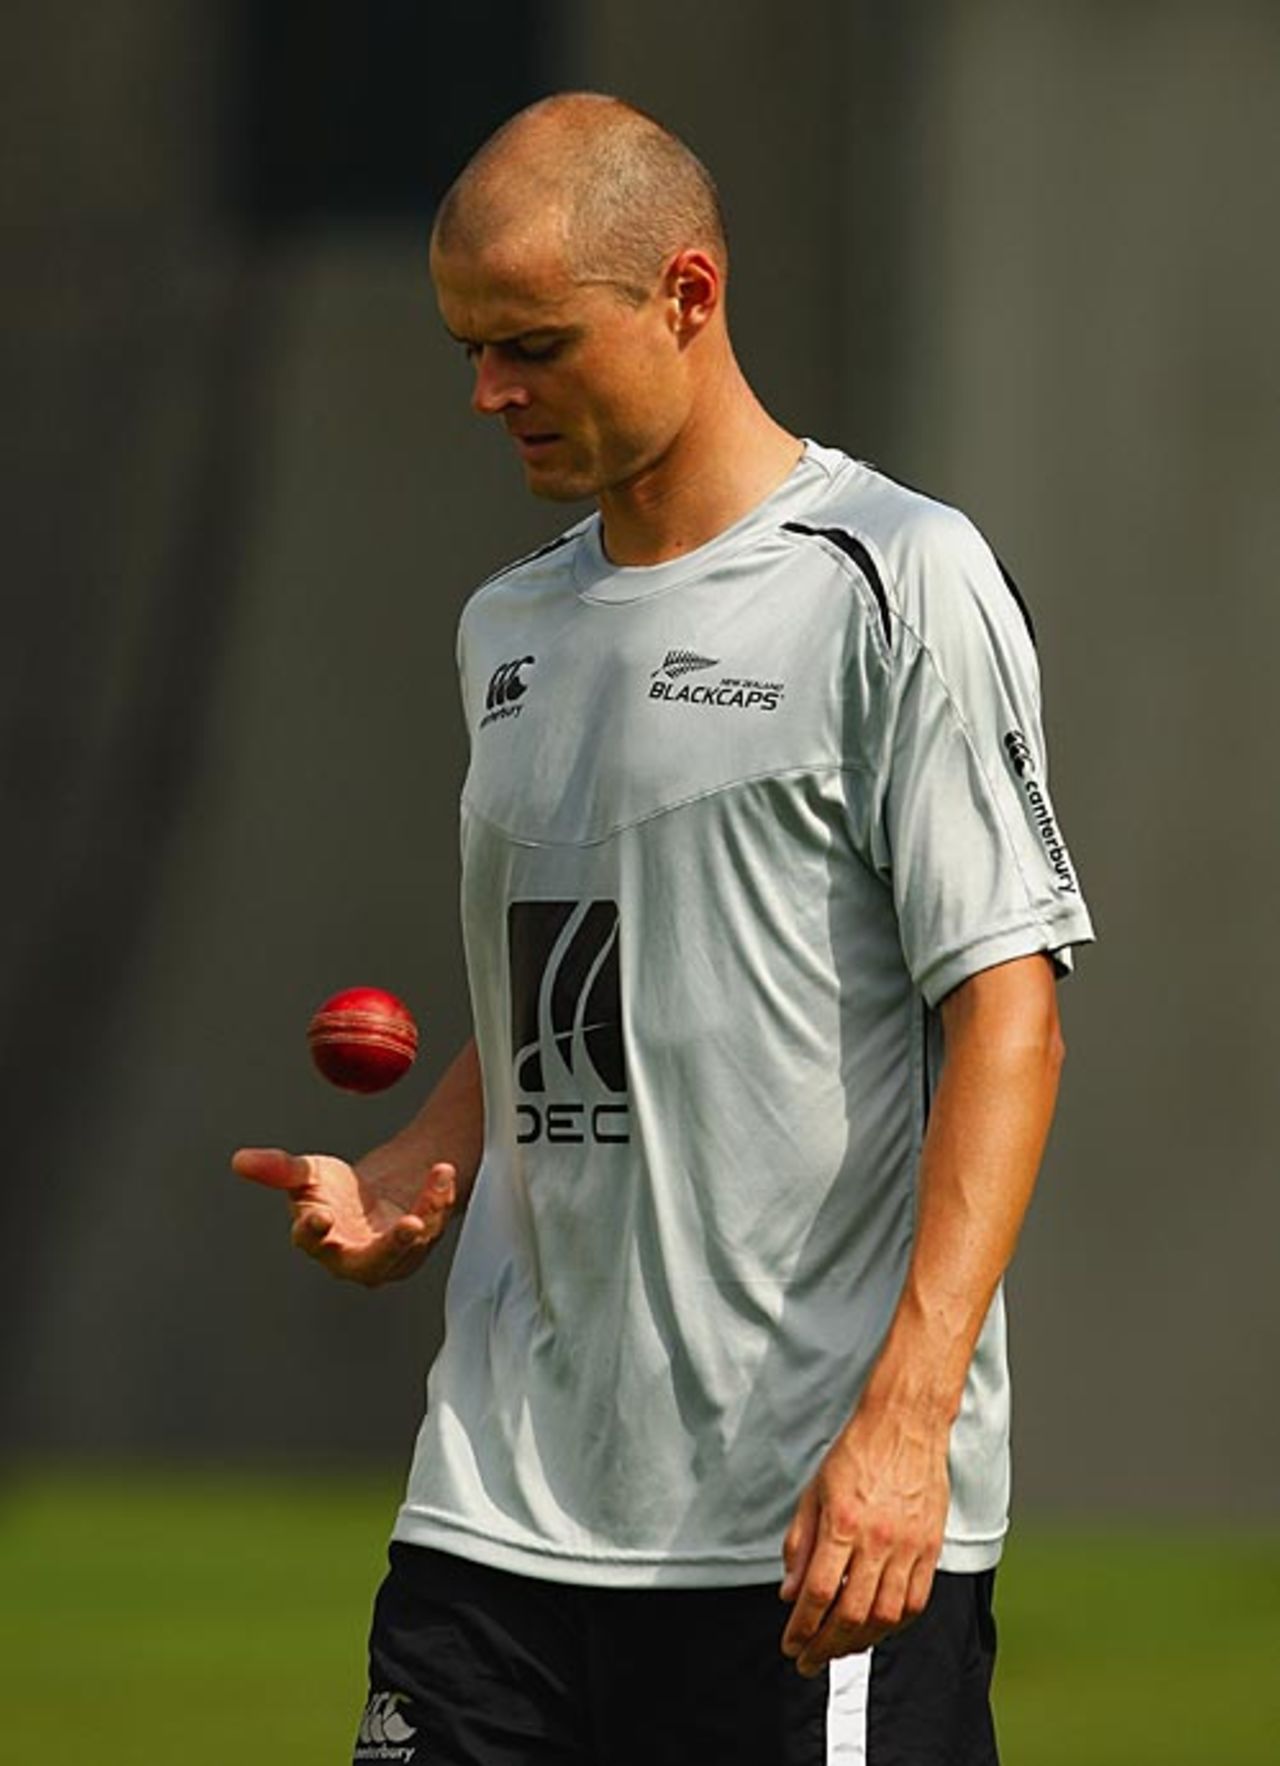 Chris Martin gears up to bowl, Brisbane, November 19, 2008